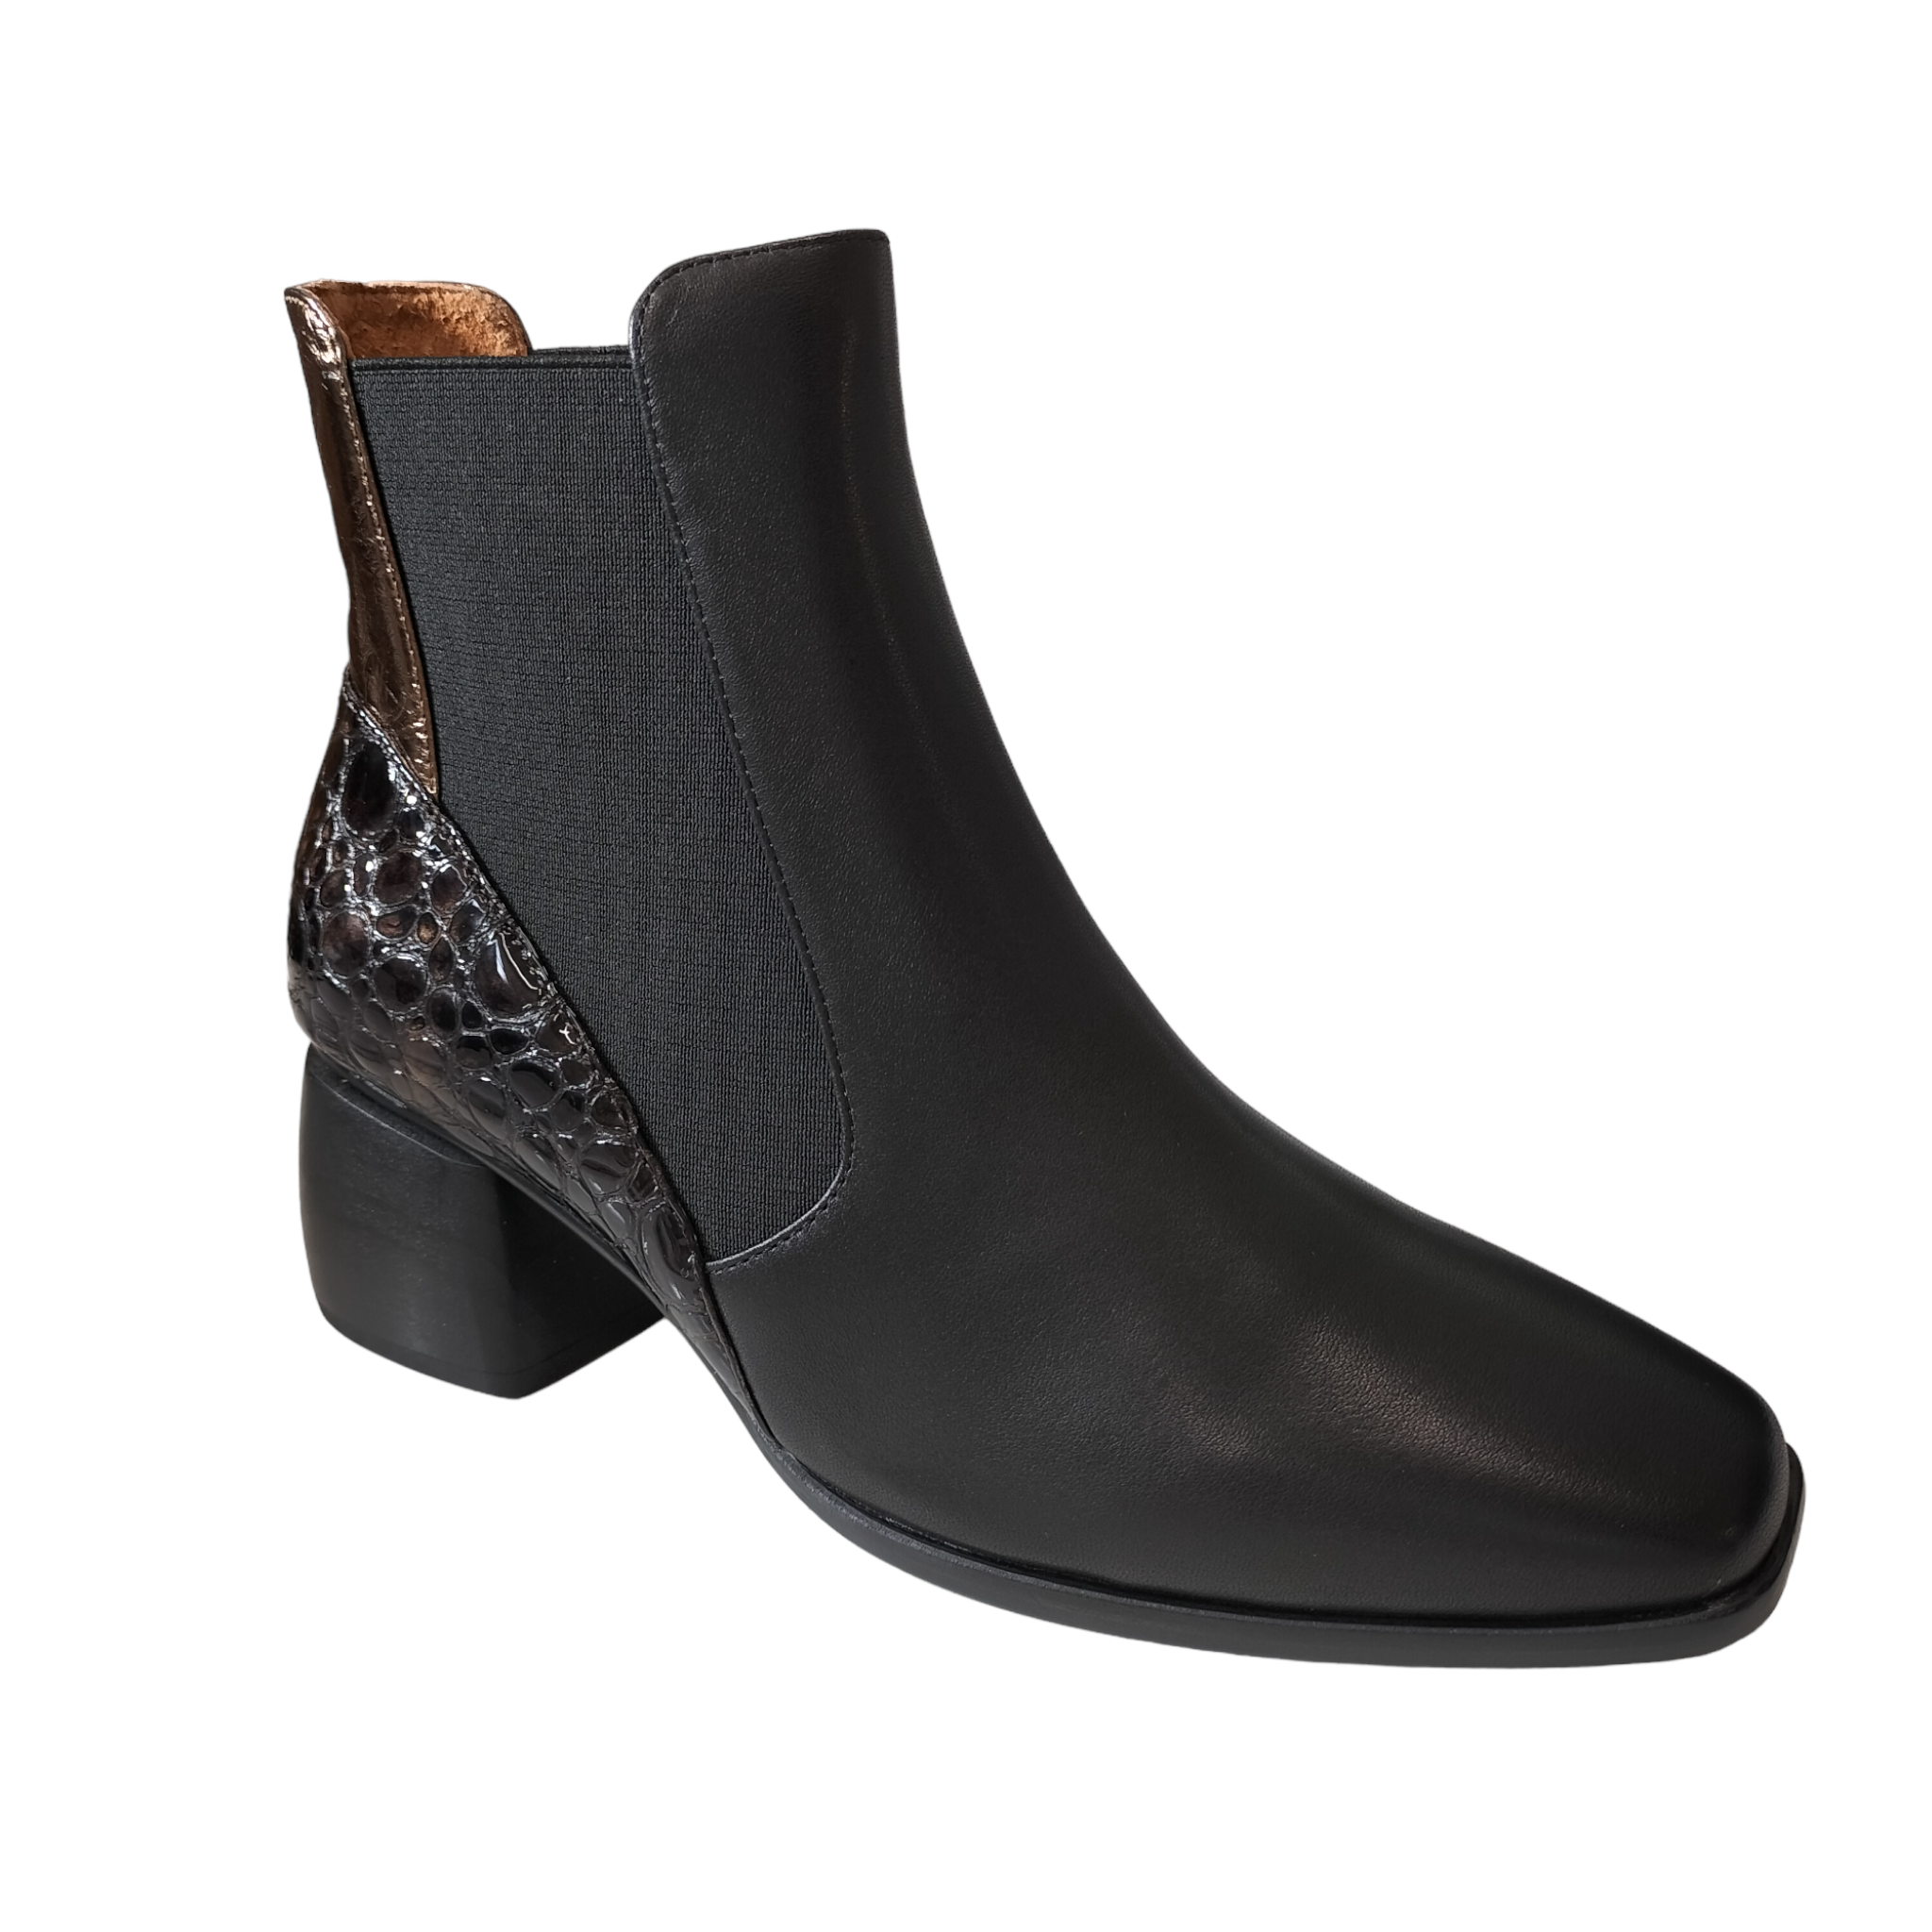 Pursuit - shoe&amp;me - Bresley - Boot - Boots, Winter, Womens